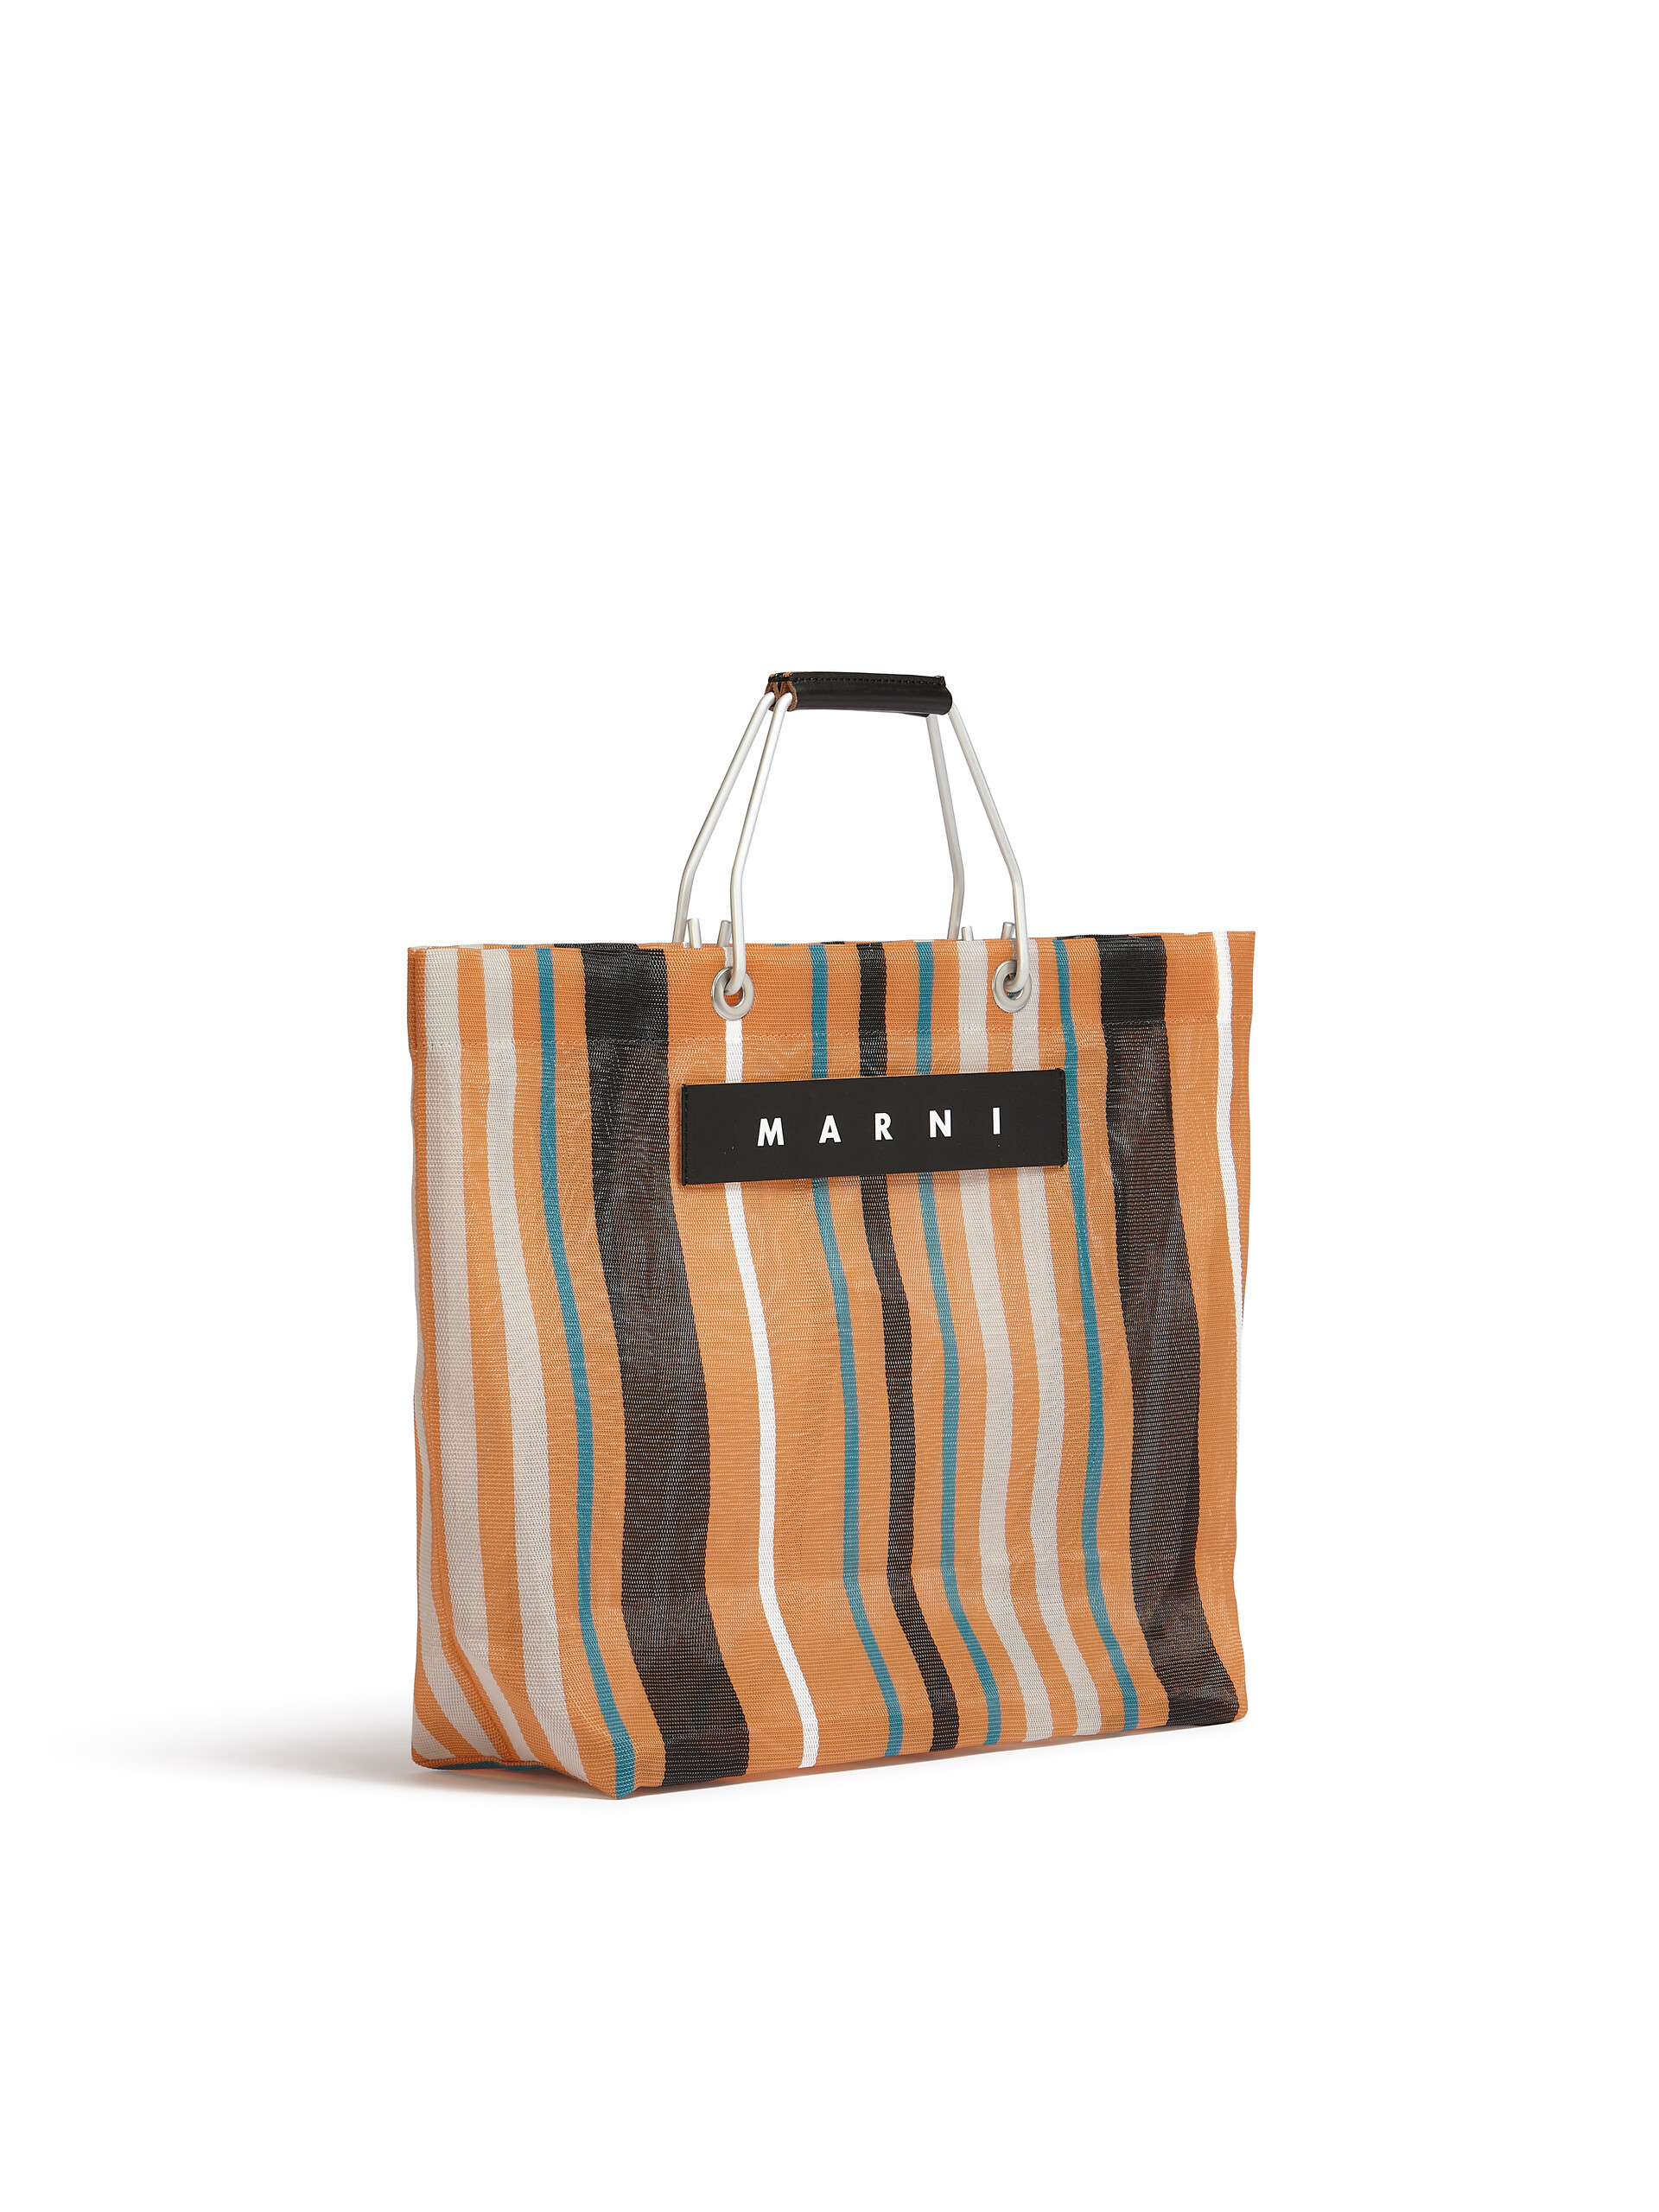 MARNI MARKET STRIPE multicolor orange bag - Shopping Bags - Image 2